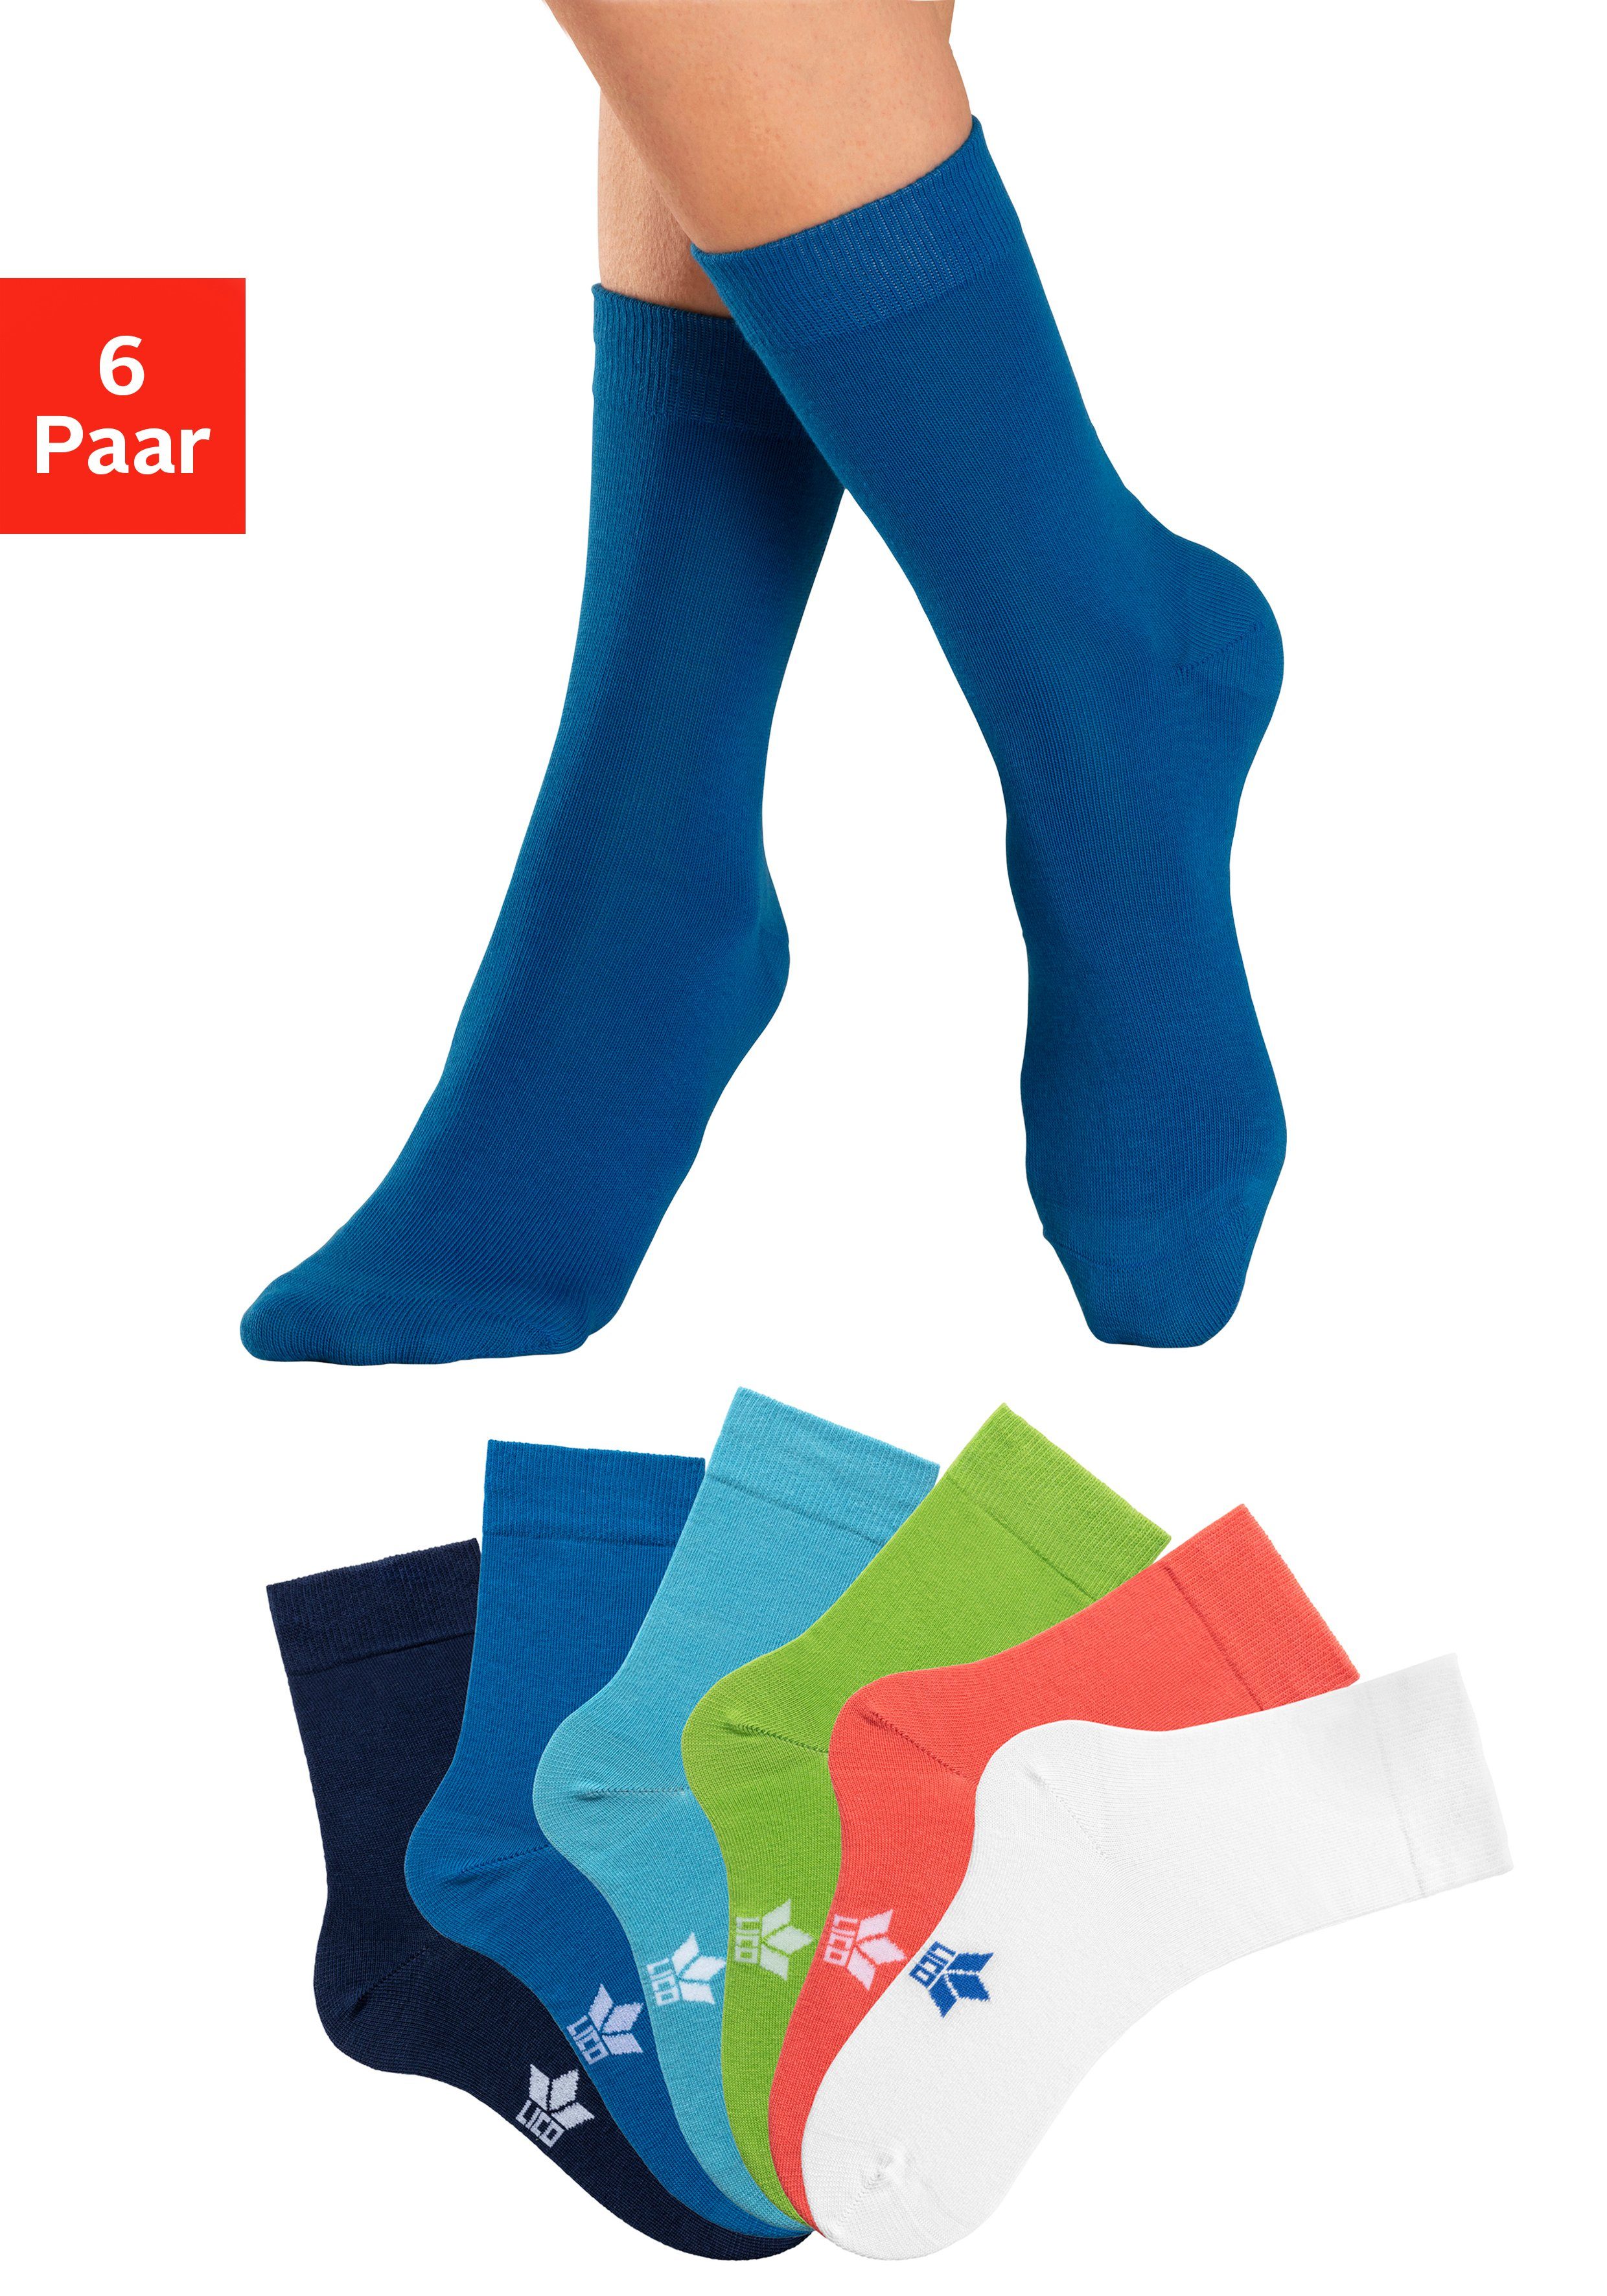 Lico Freizeitsocken (6-Paar) in bunter Farbkombi | Lange Socken